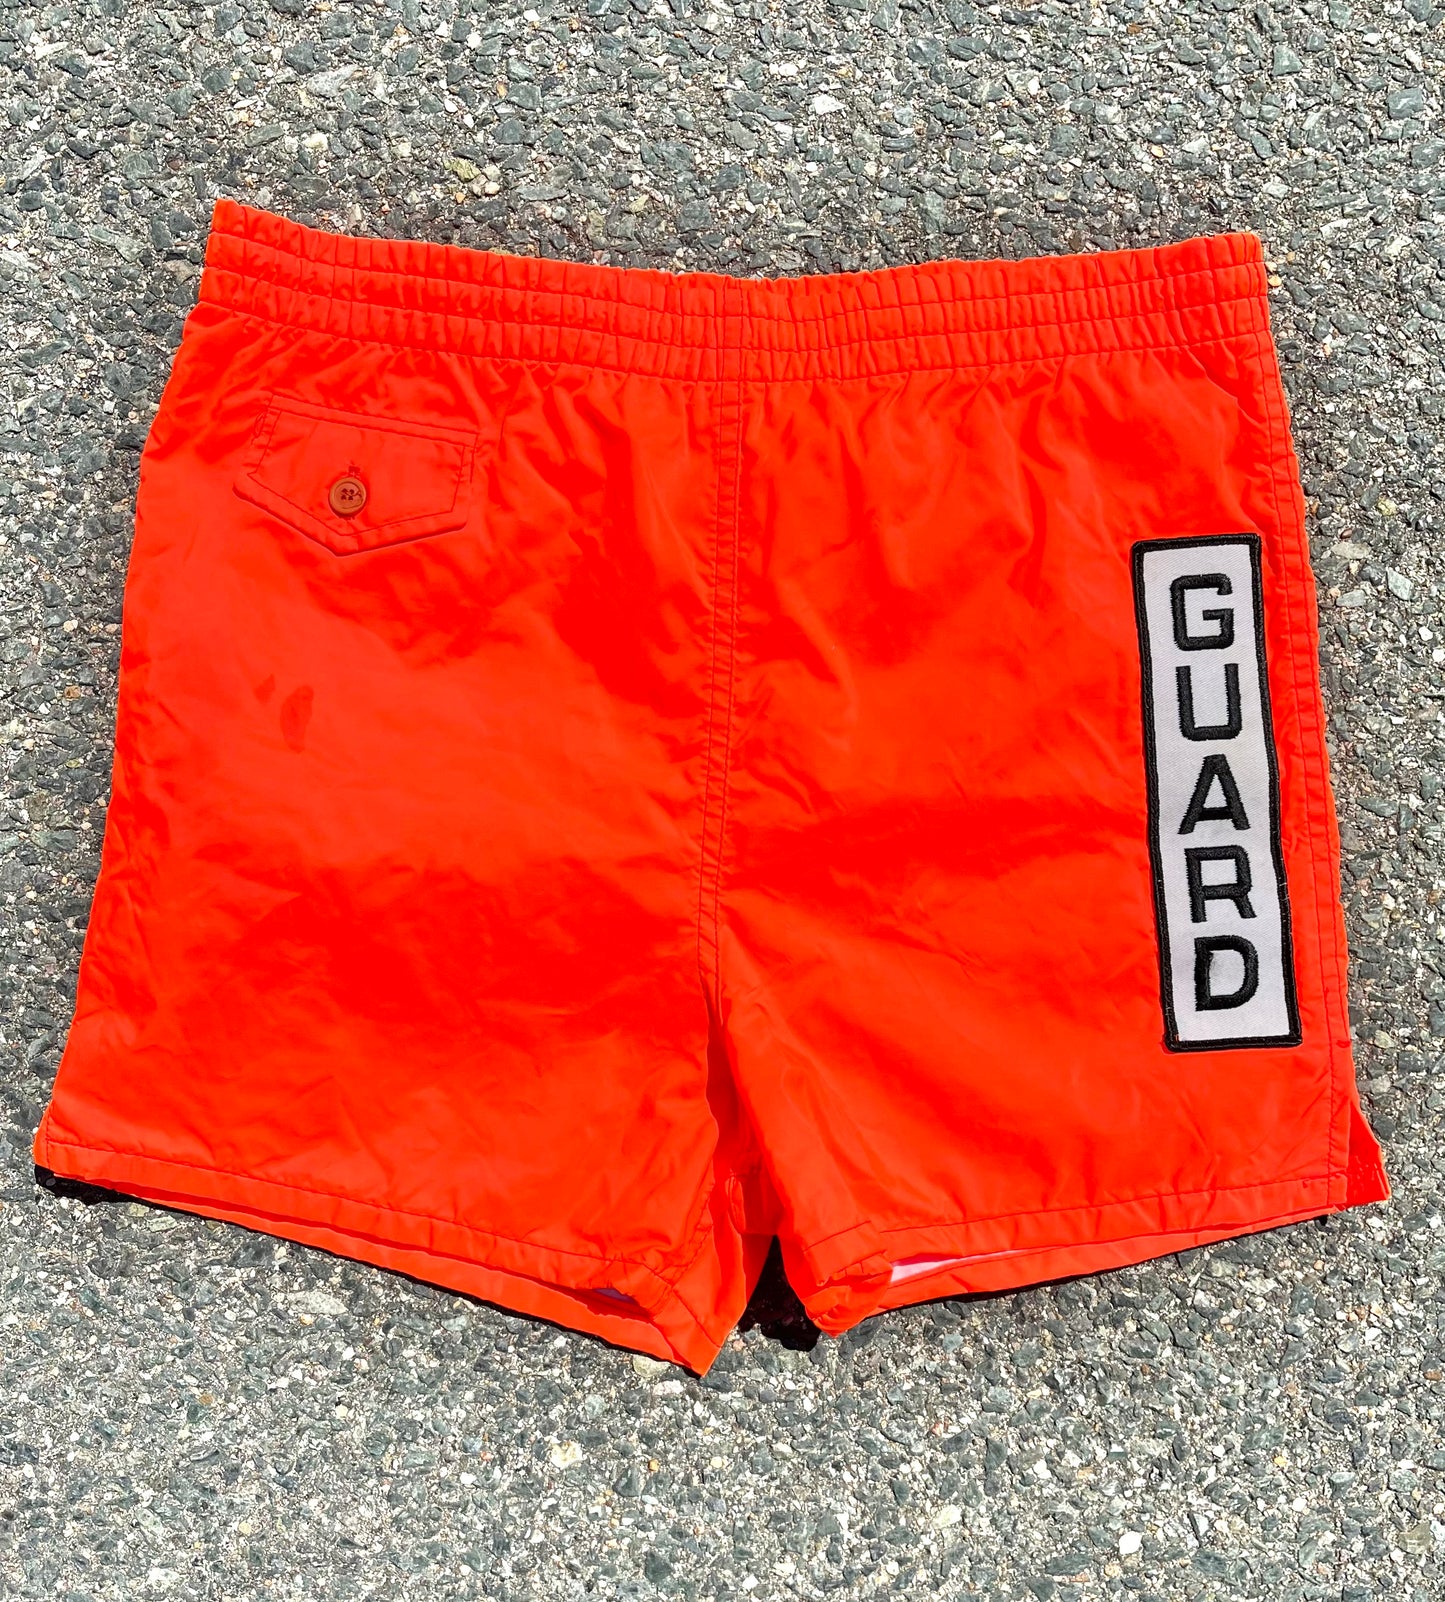 Vintage Life Guard Neon Orange Retro 70's 80's Bathing Suit Swim Shorts Size 32